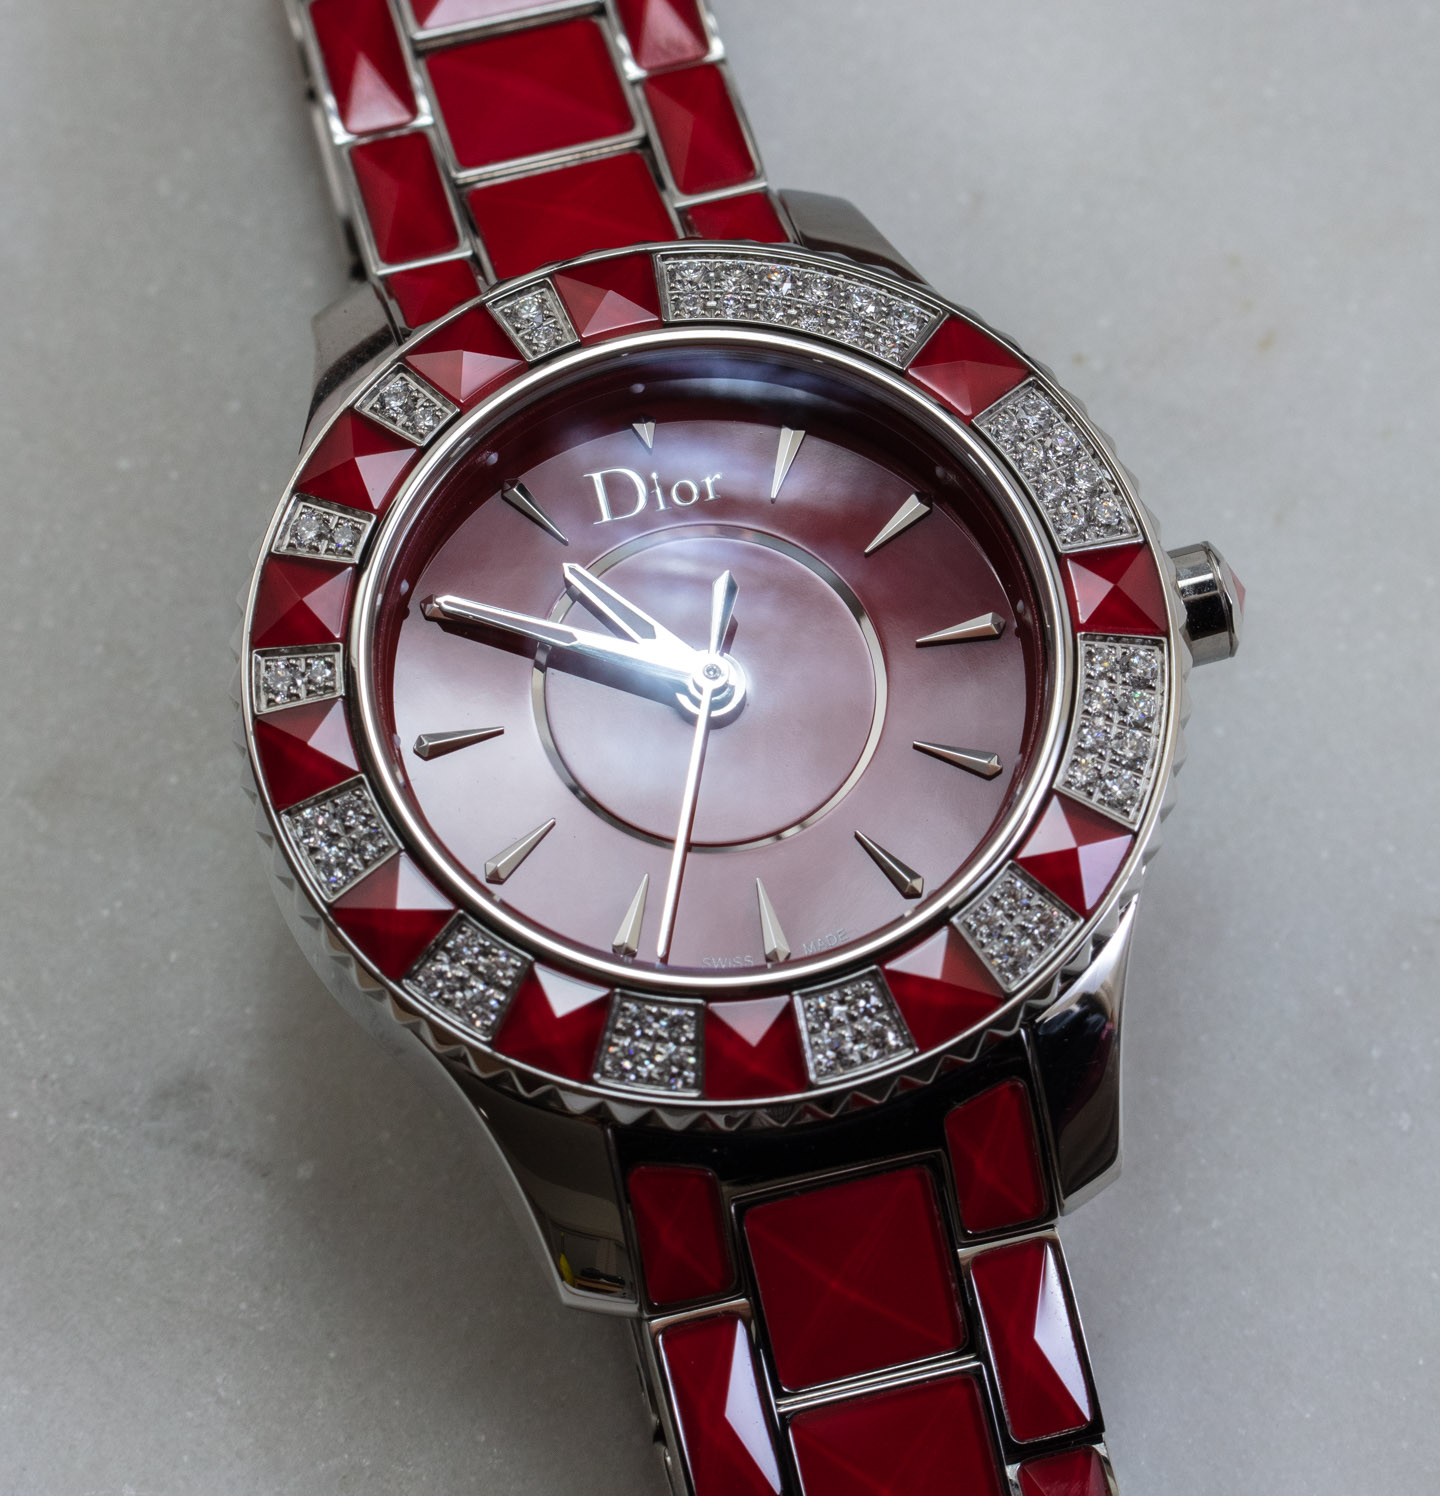 dior watch original price